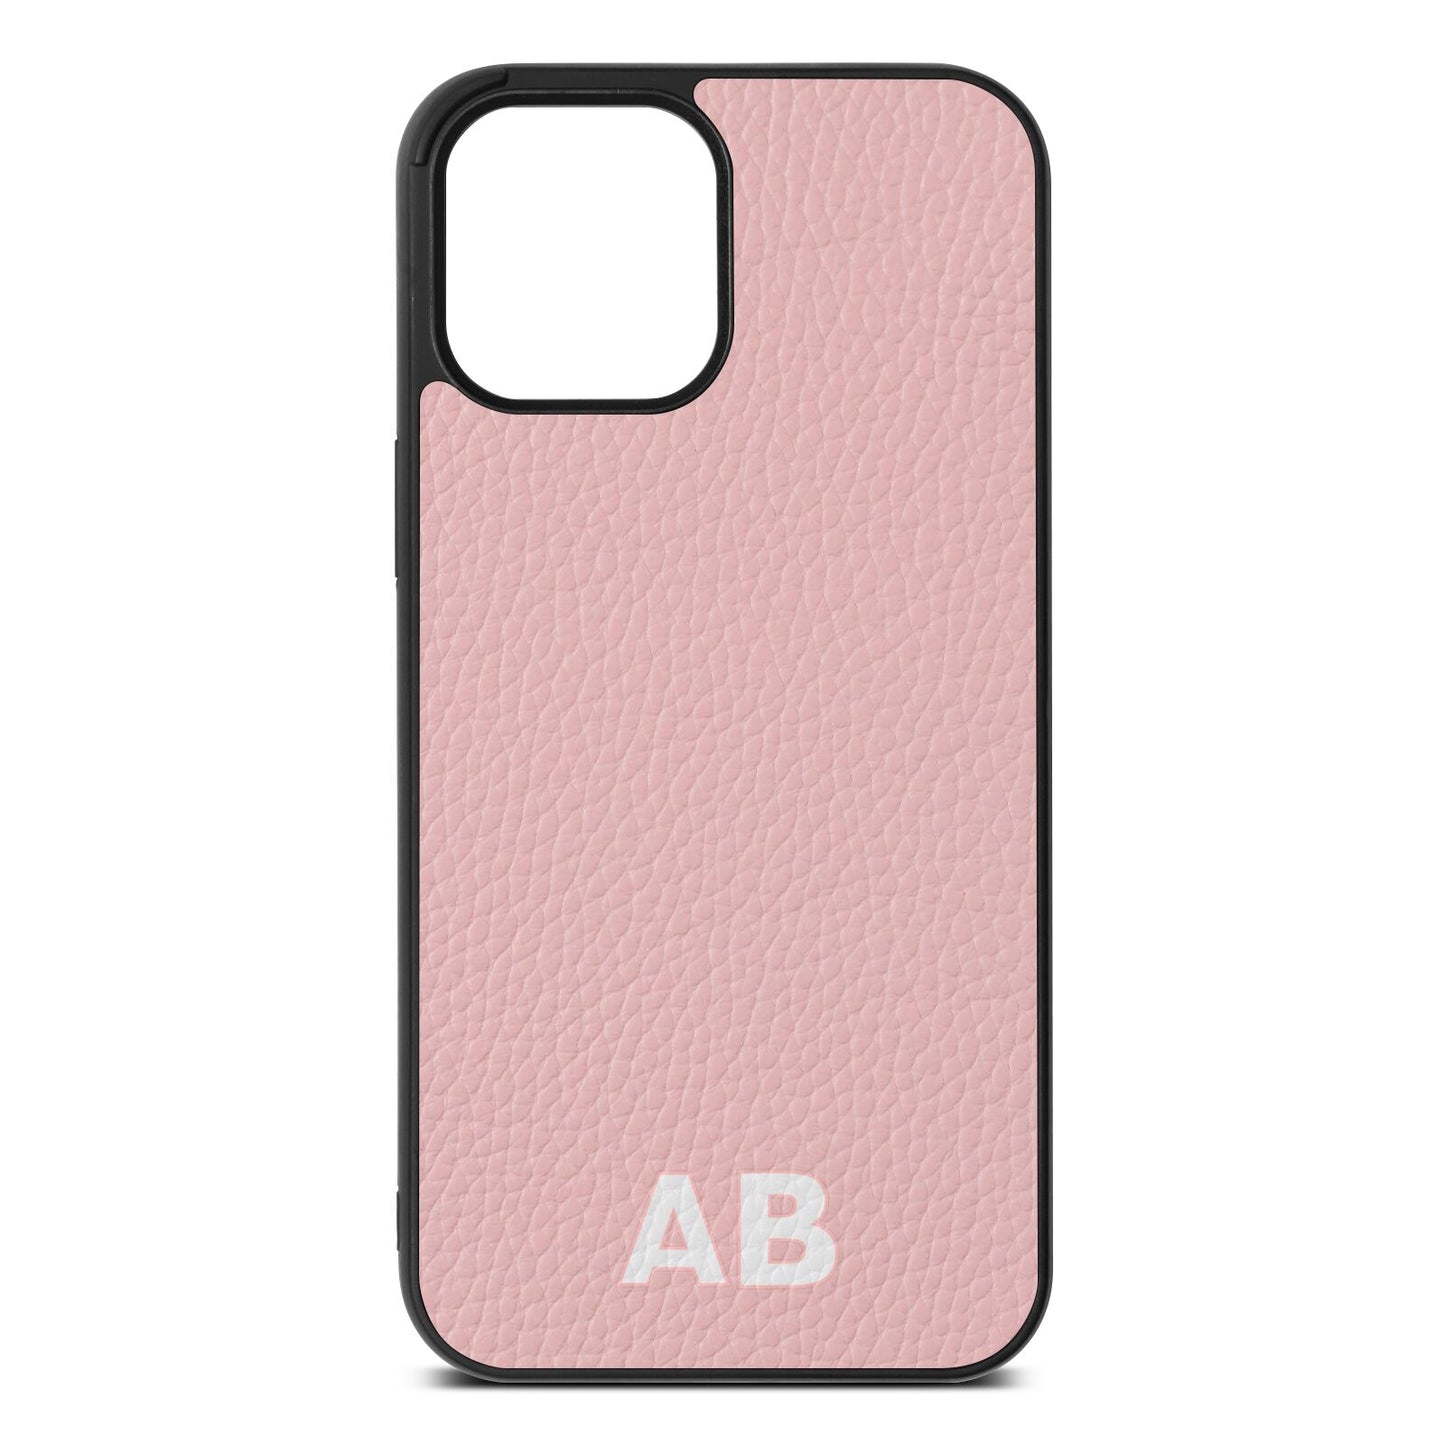 Sans Serif Initials Pink Pebble Leather iPhone 12 Pro Max Case